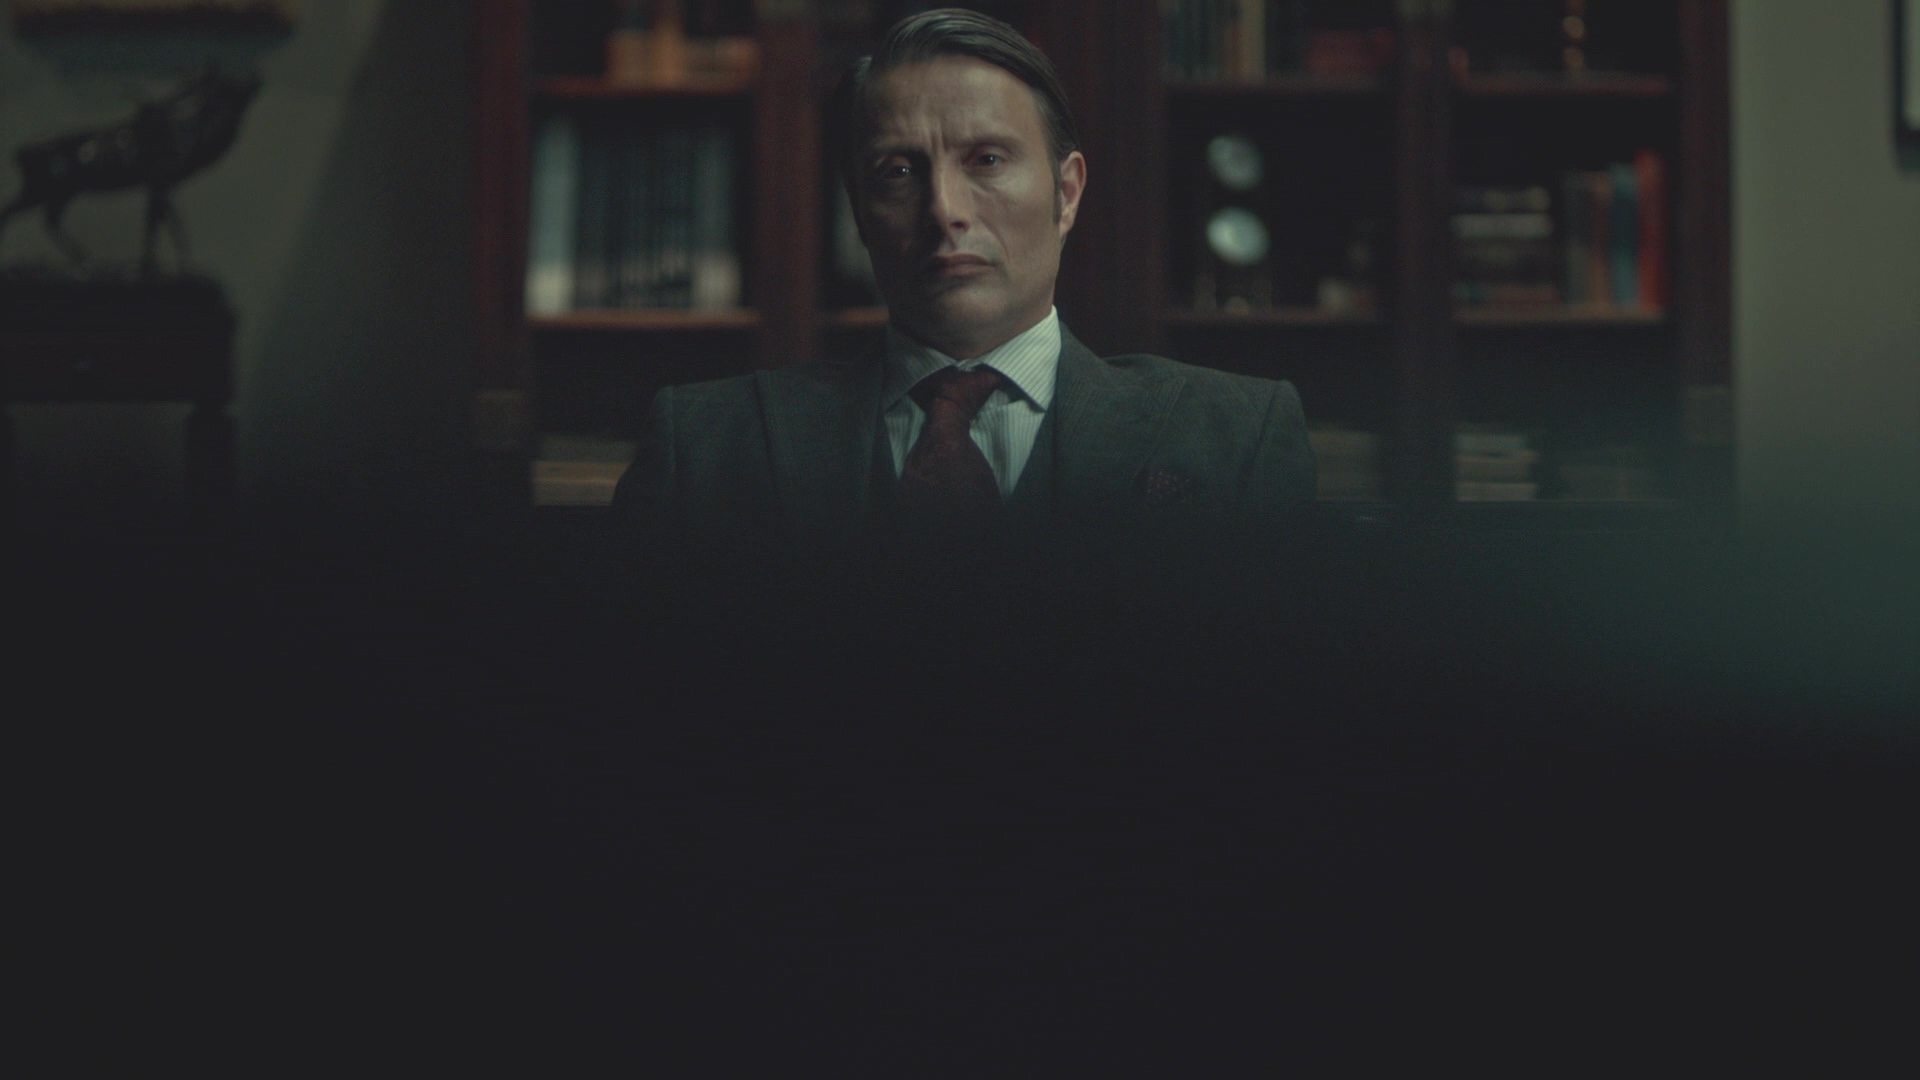 [汉尼拔].Hannibal.S02D01.2014.BluRay.1080p.AVC.DTS-HD.MA.5.1-dislike@HDSky   46.12G-13.jpg